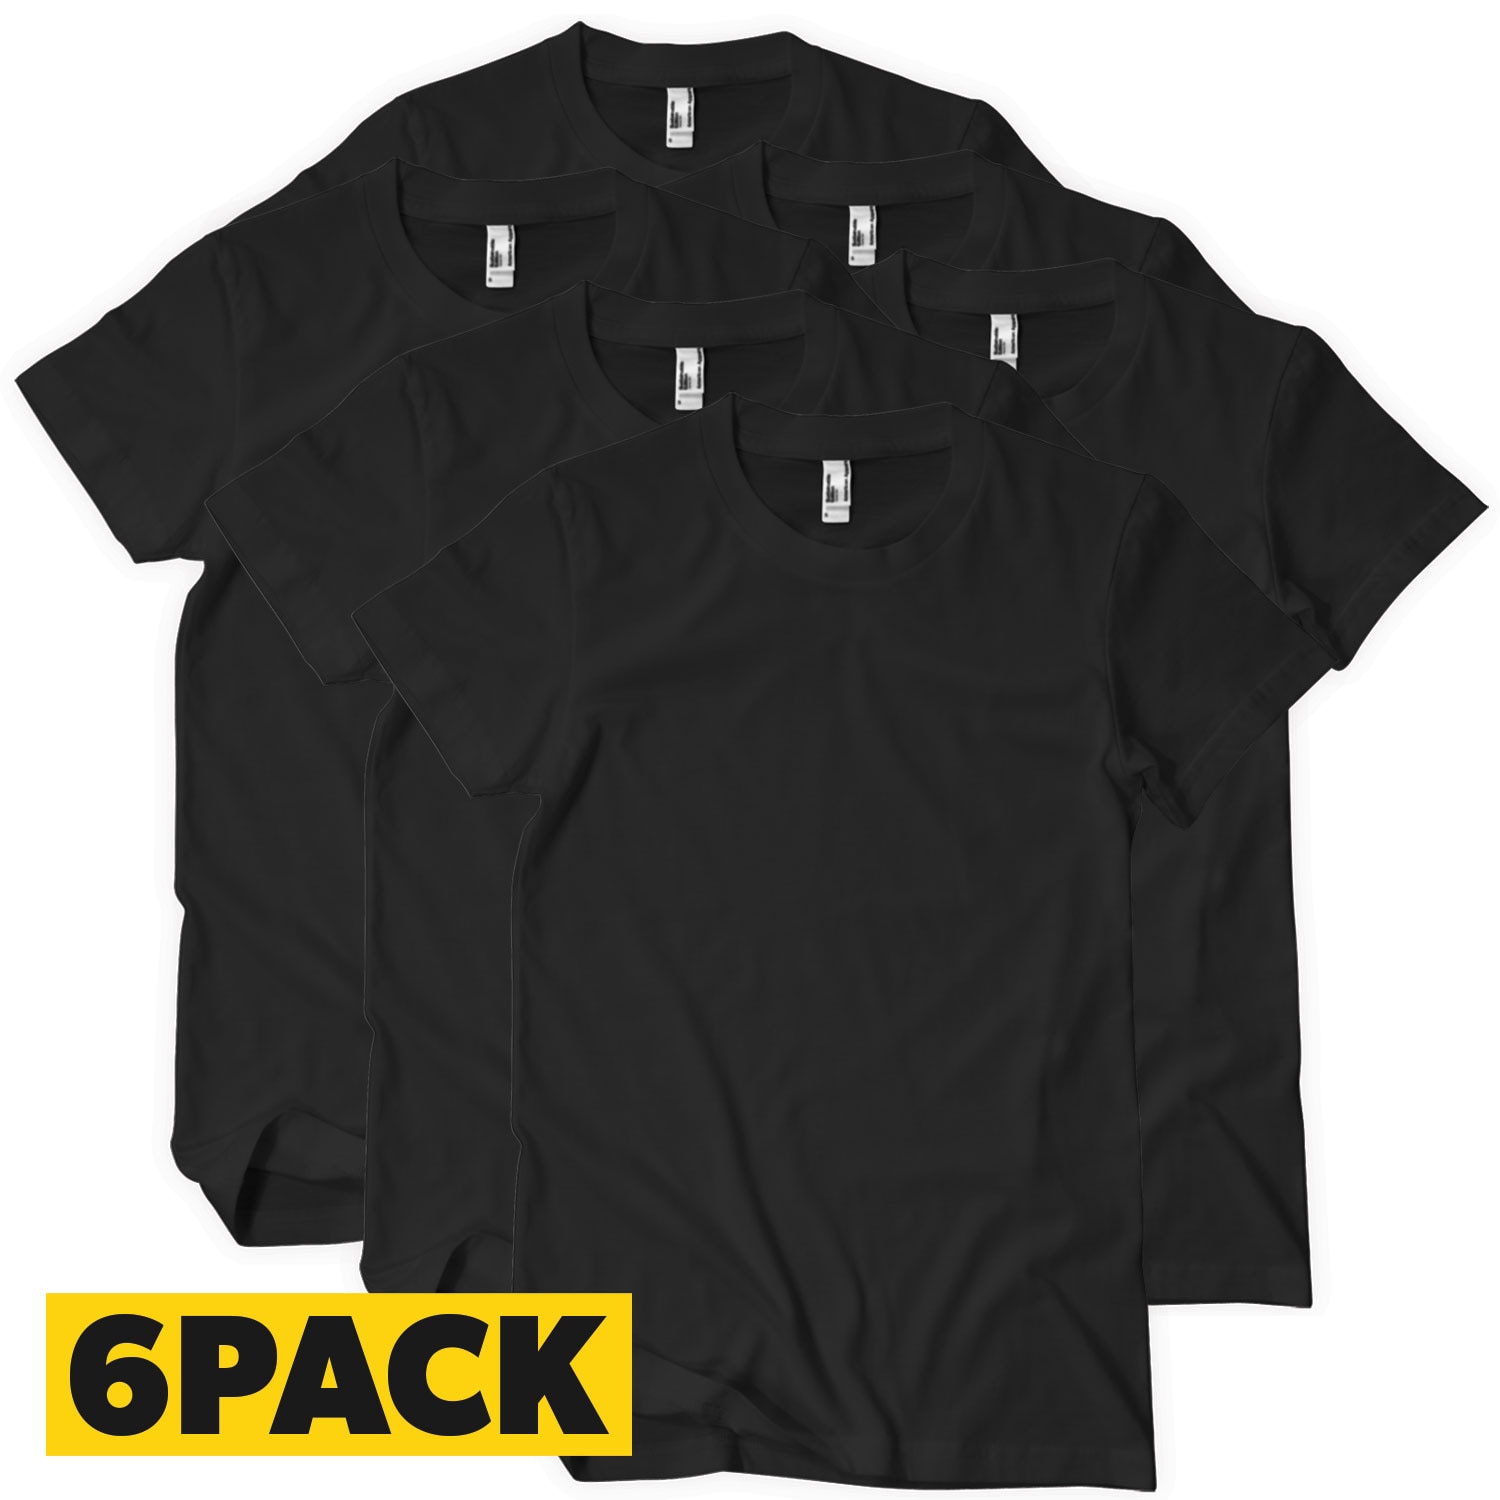 T-Shirts Bigpack Black - 6 pack